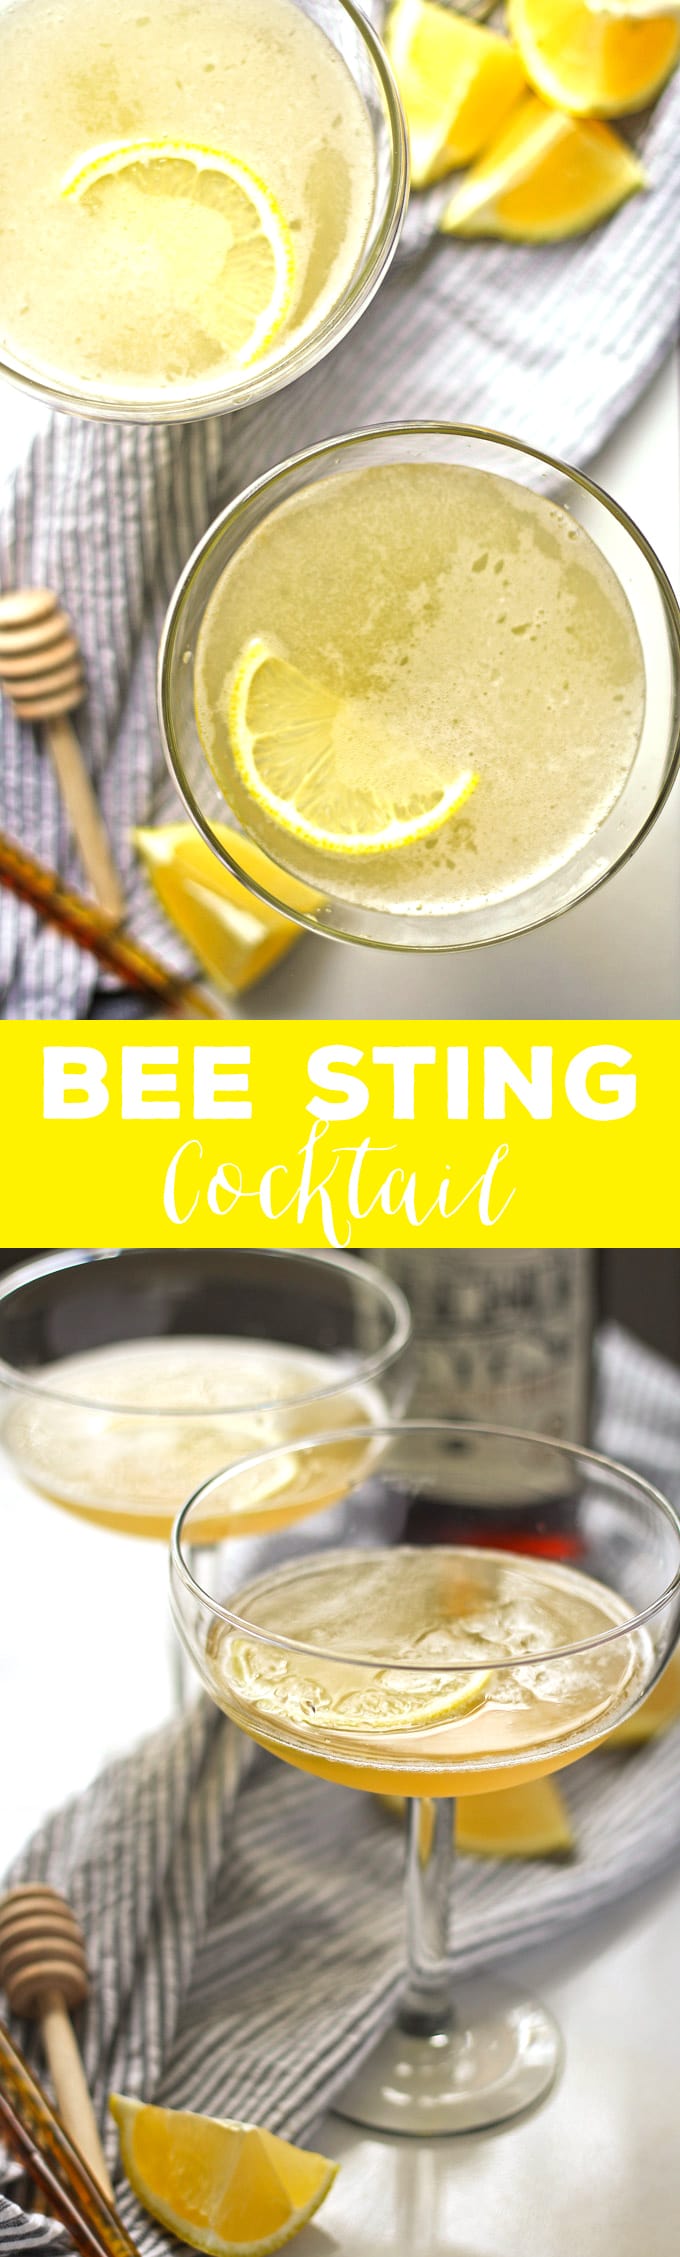 BEE STING DRINK RECIPE